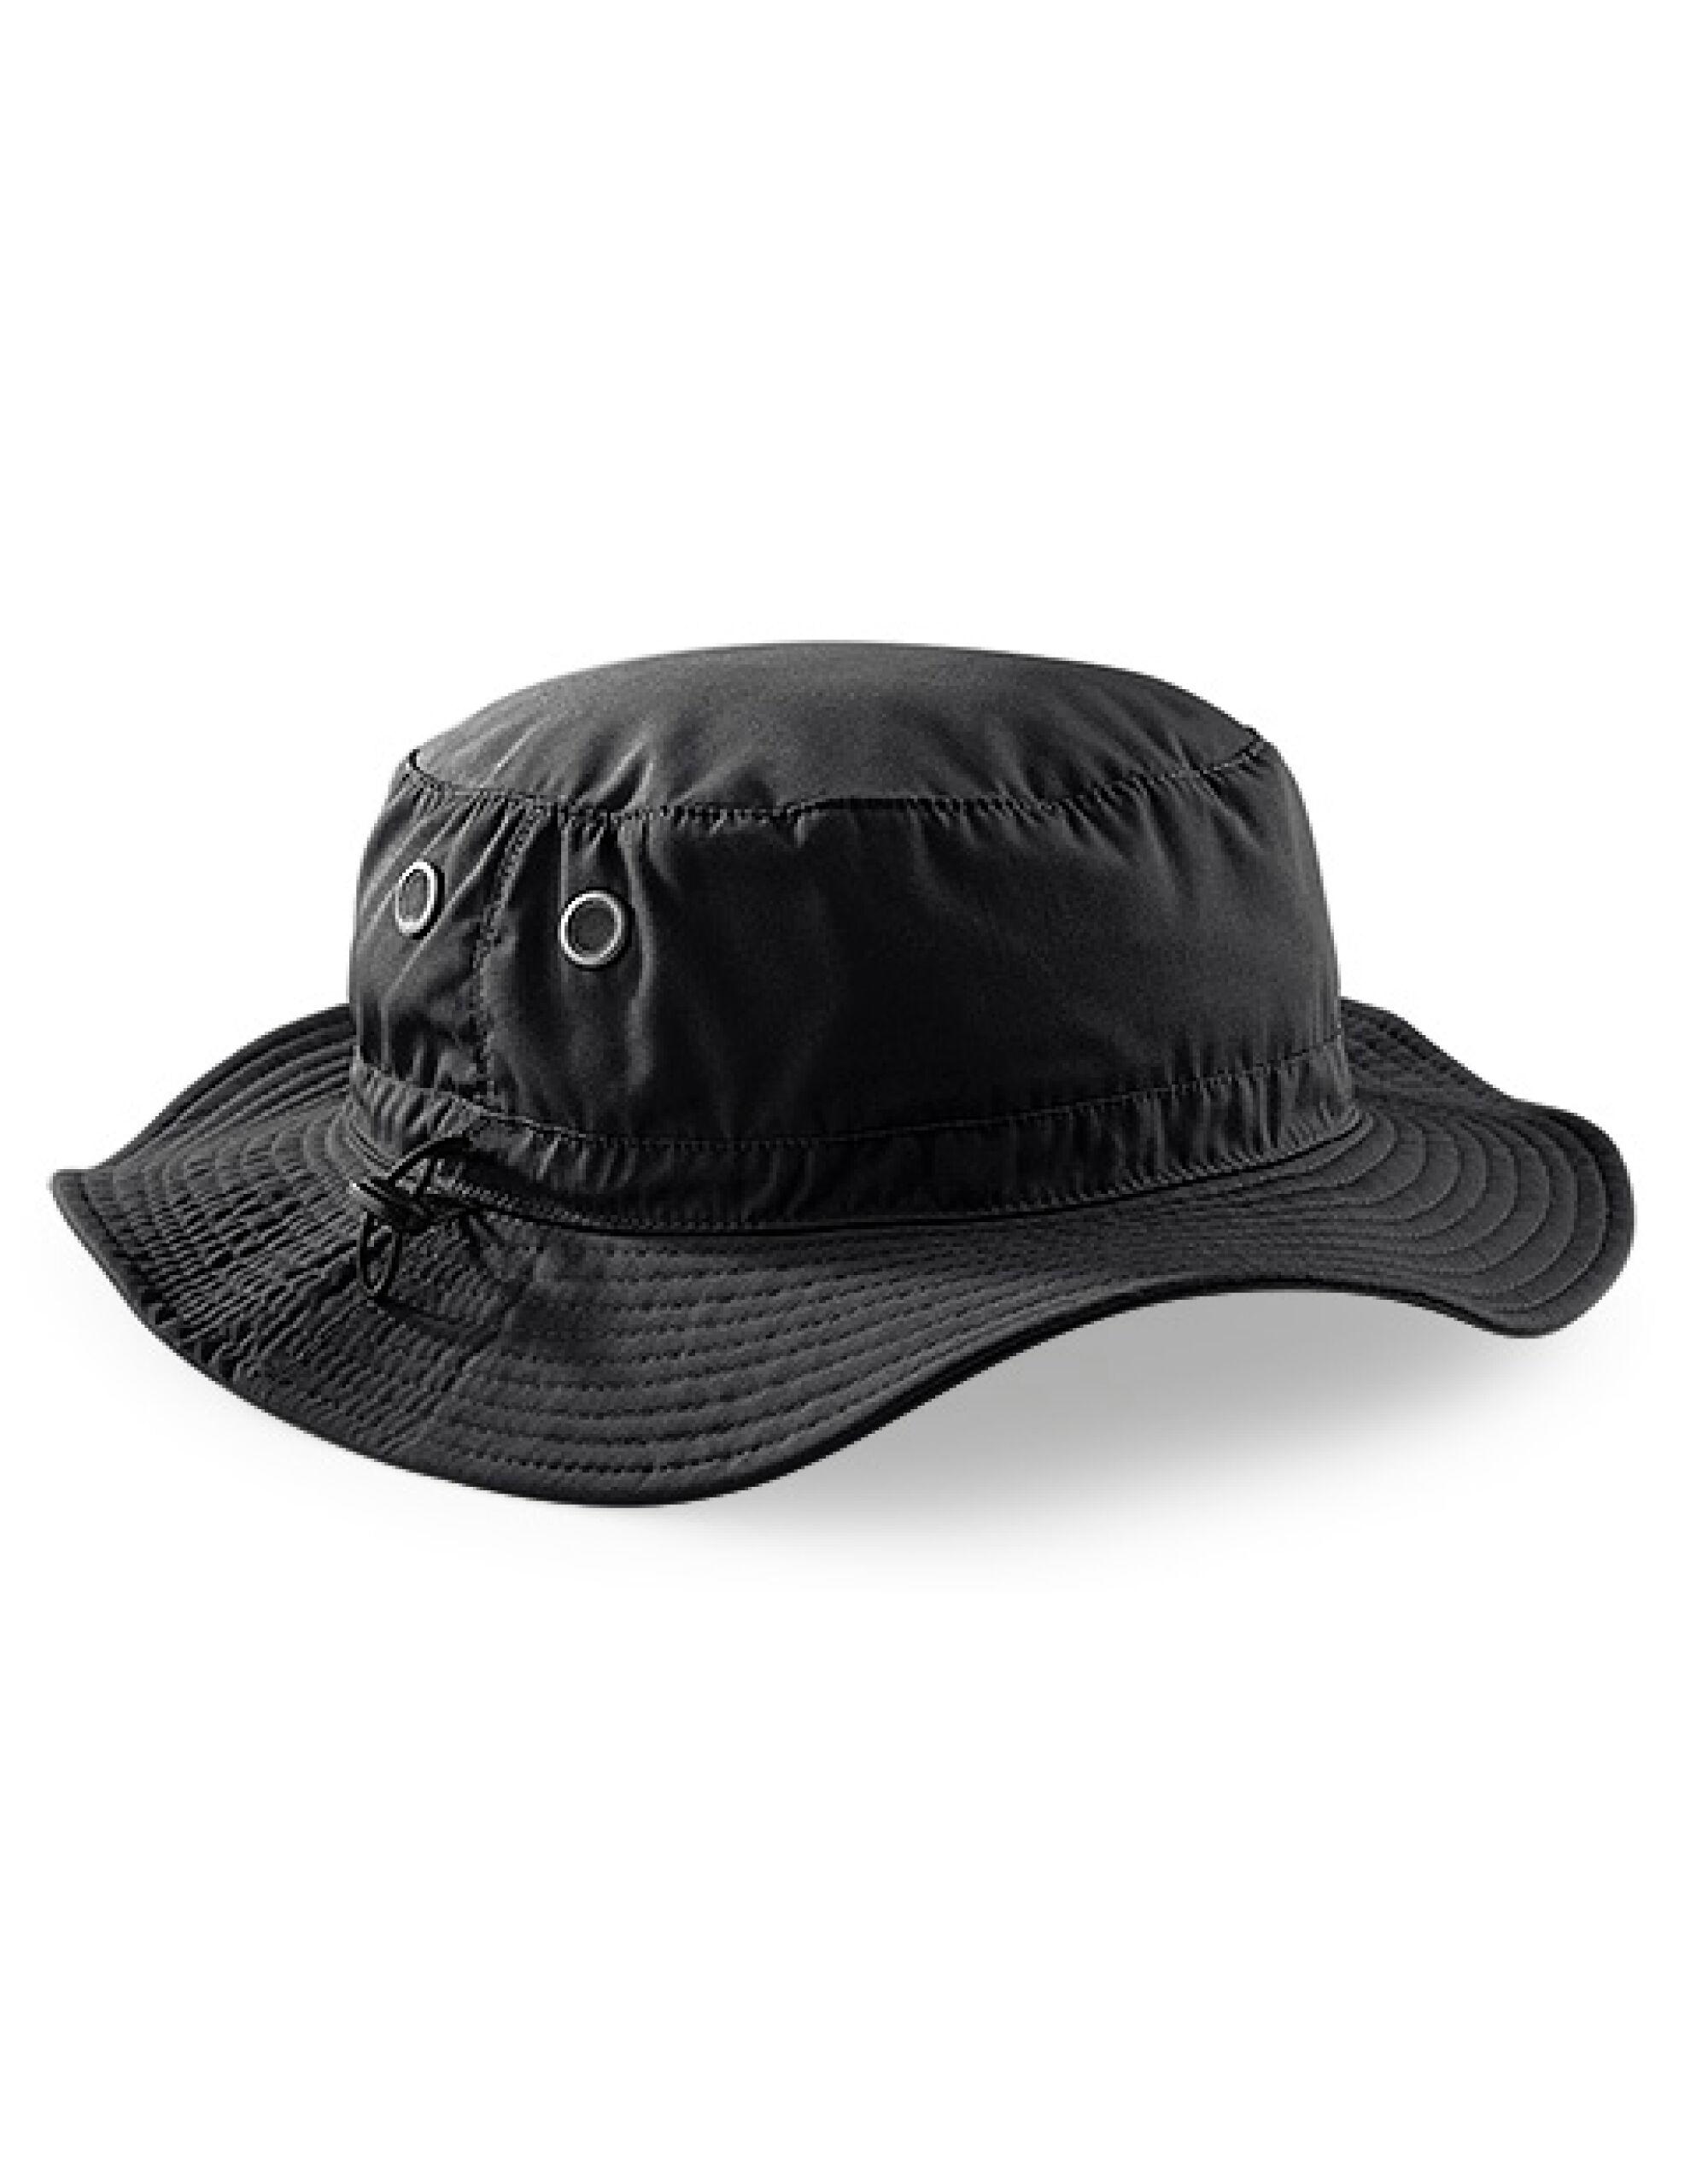 Beechfield Cargo Bucket Hat in Black (Product Code: B88)